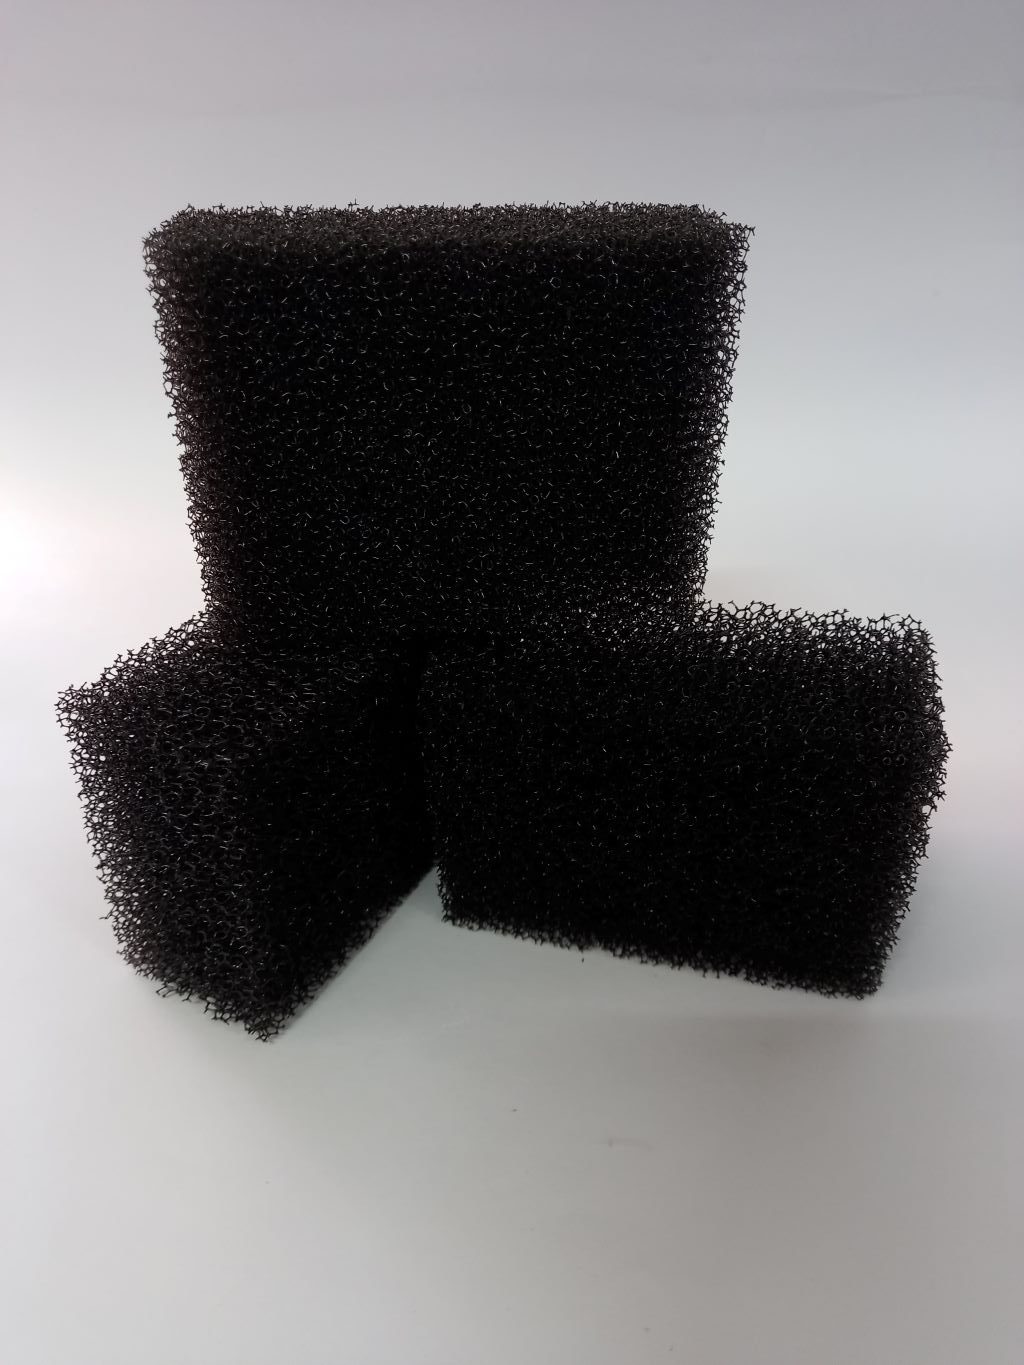 Exfoliating Black body sponge - iBeauty